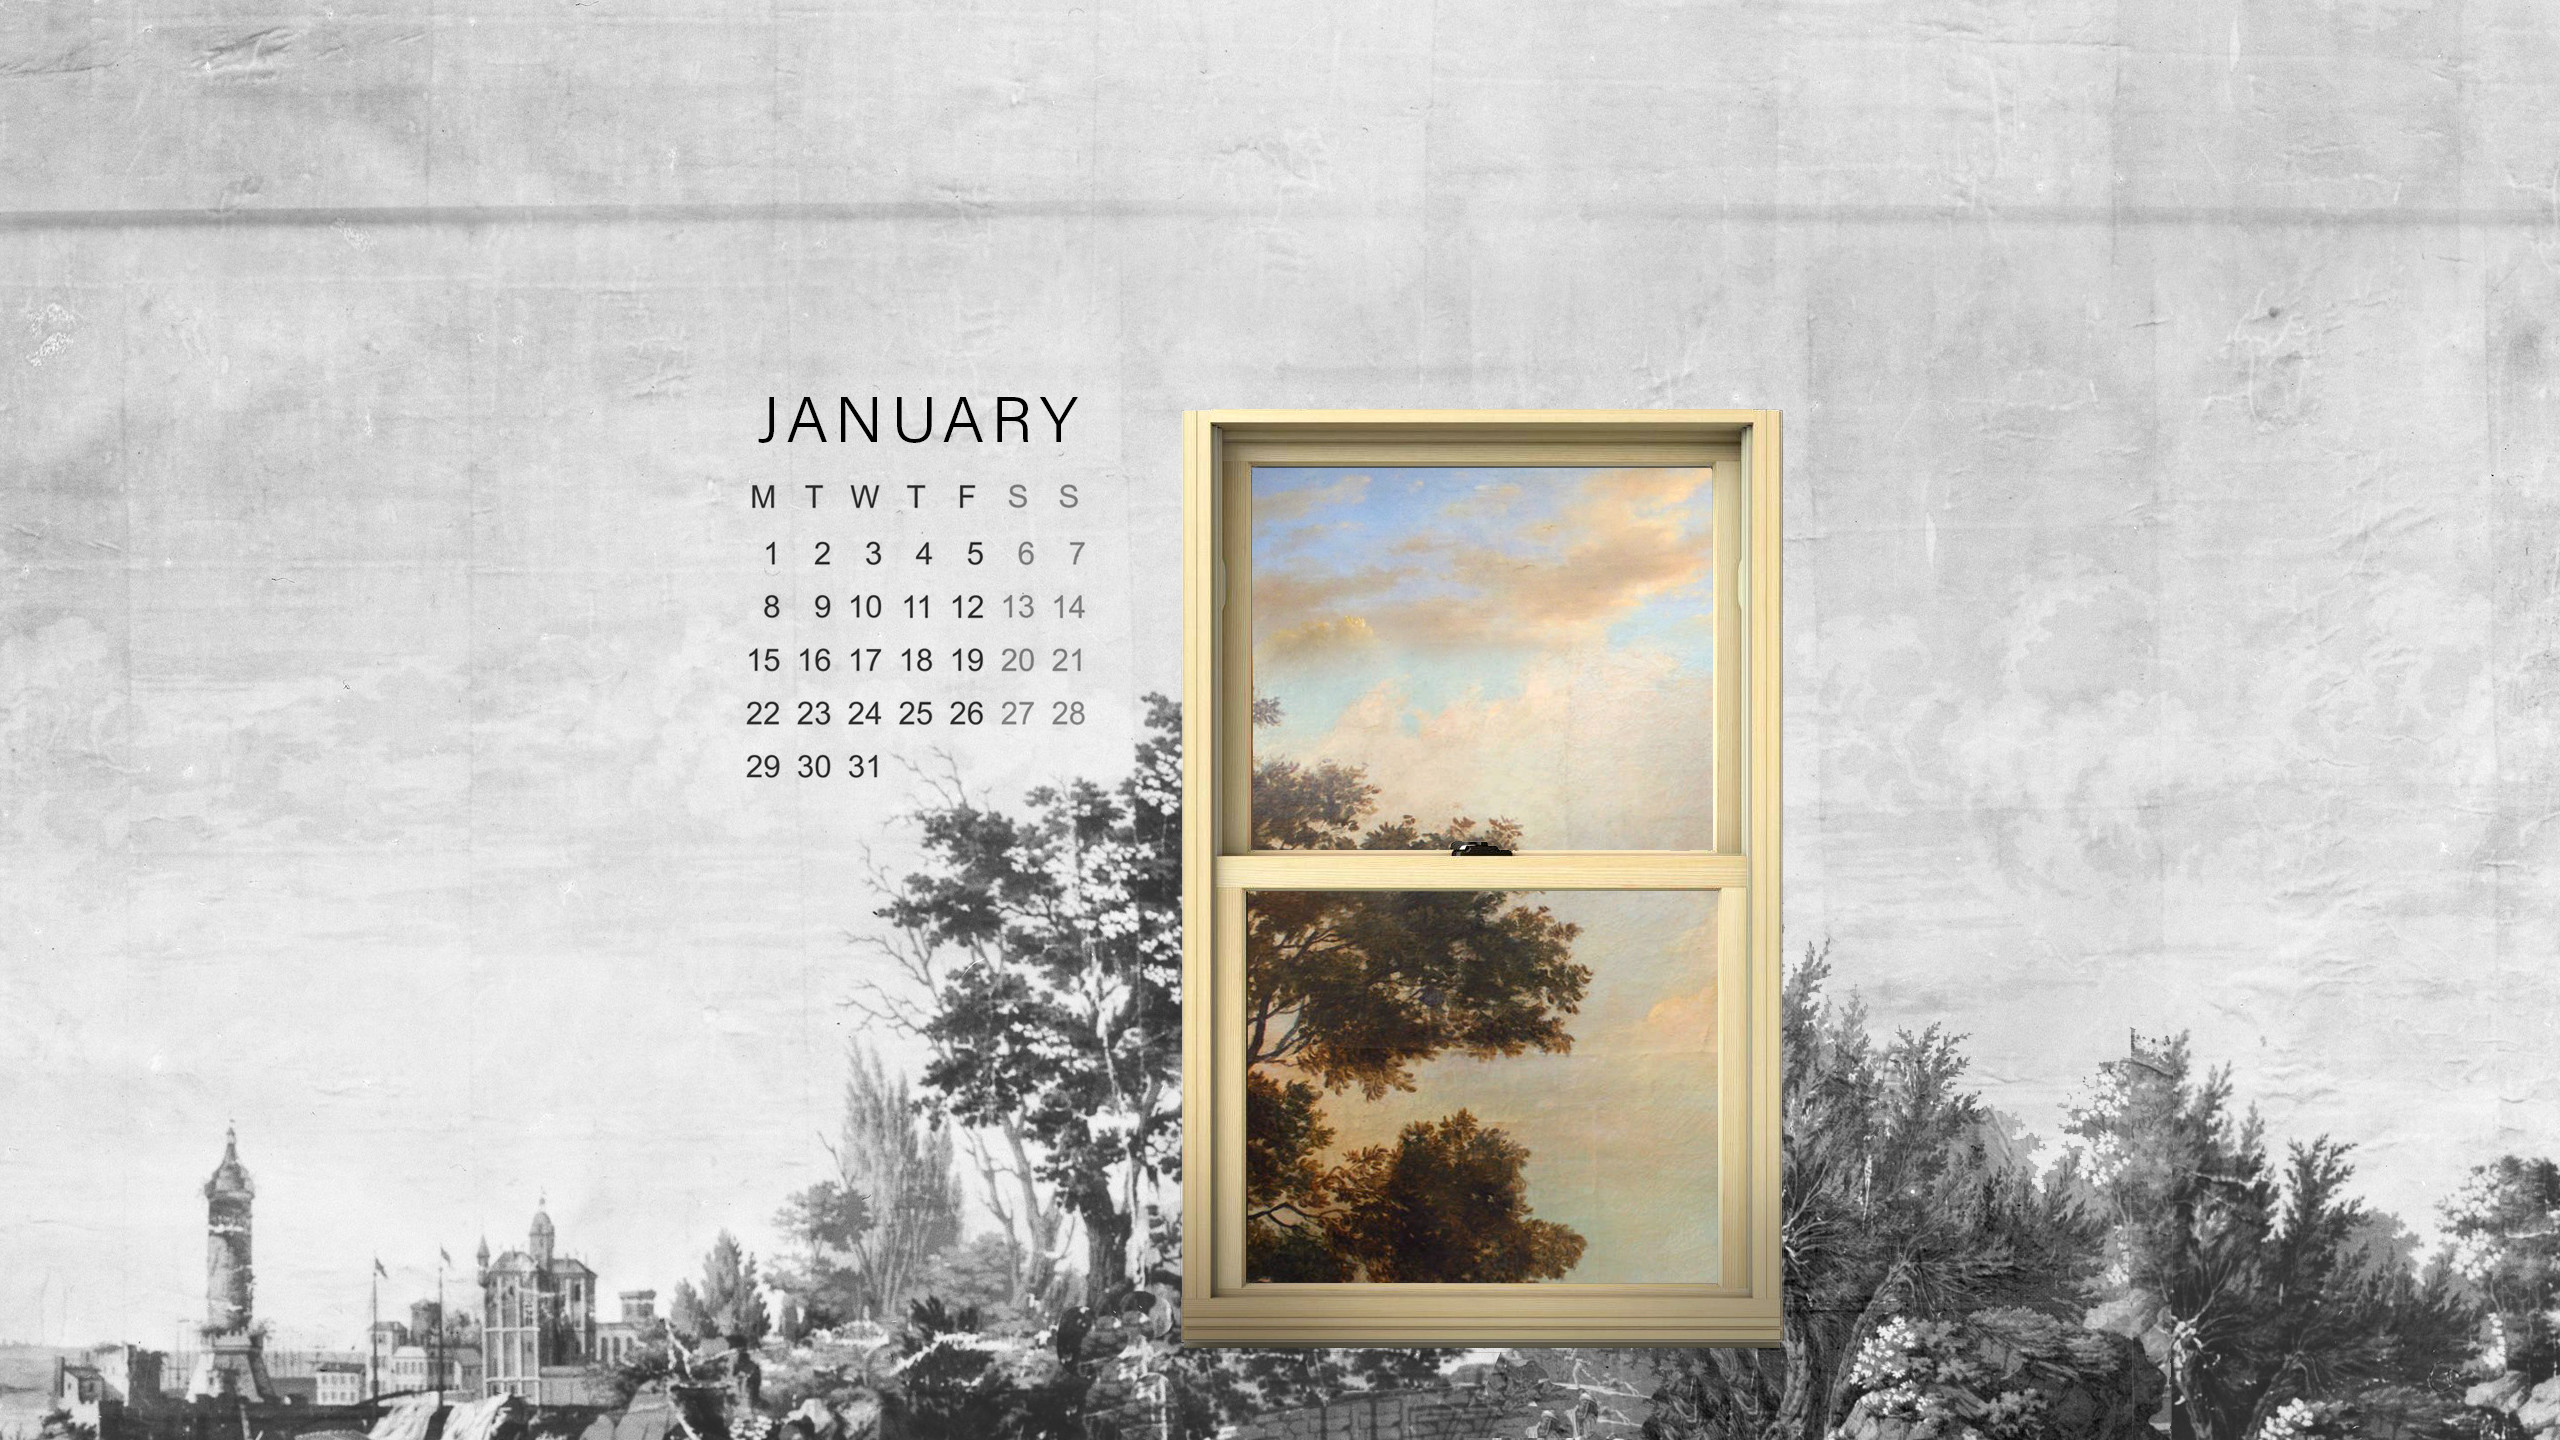 2560x1440 January 2018 Free Desktop and iPhone Wallpaper